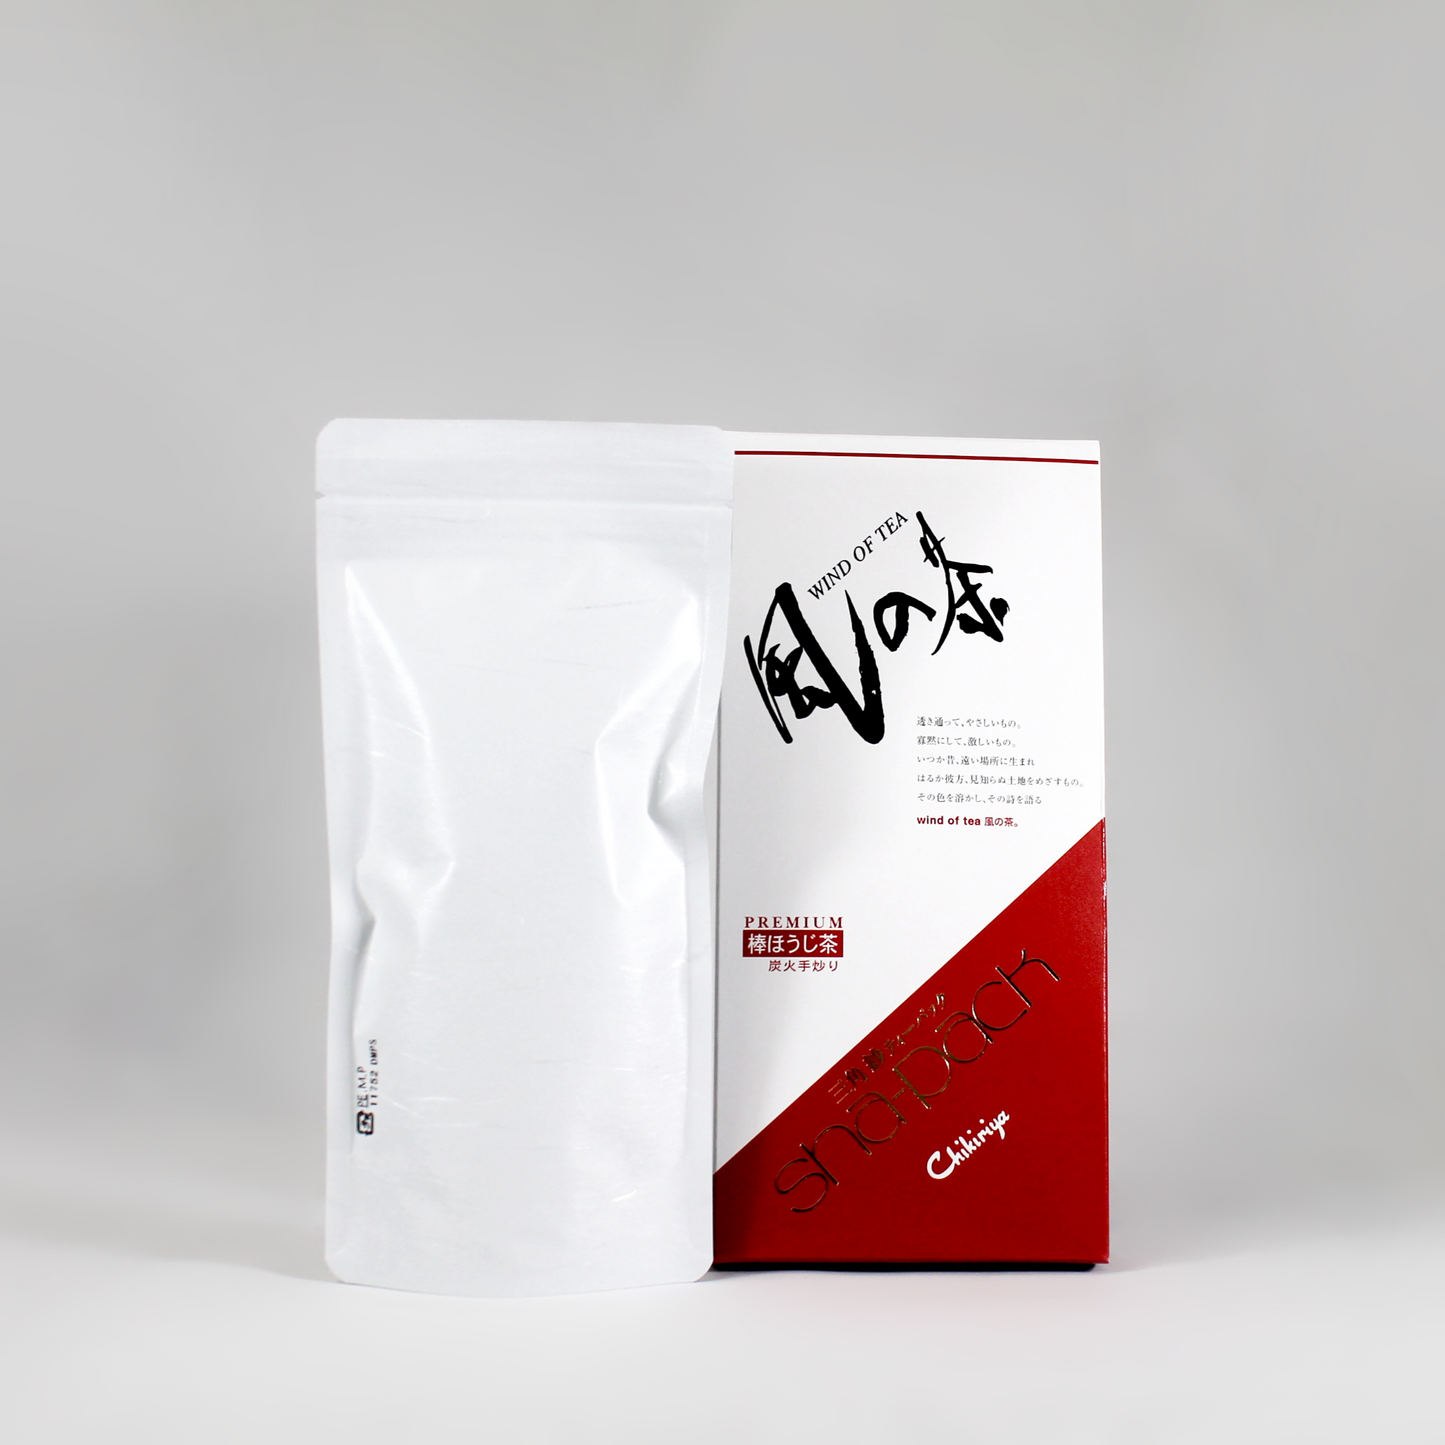 Premium Hojicha Rod (charcoal roasted by hand) - 12 Tea bags - Kaze no Cha series